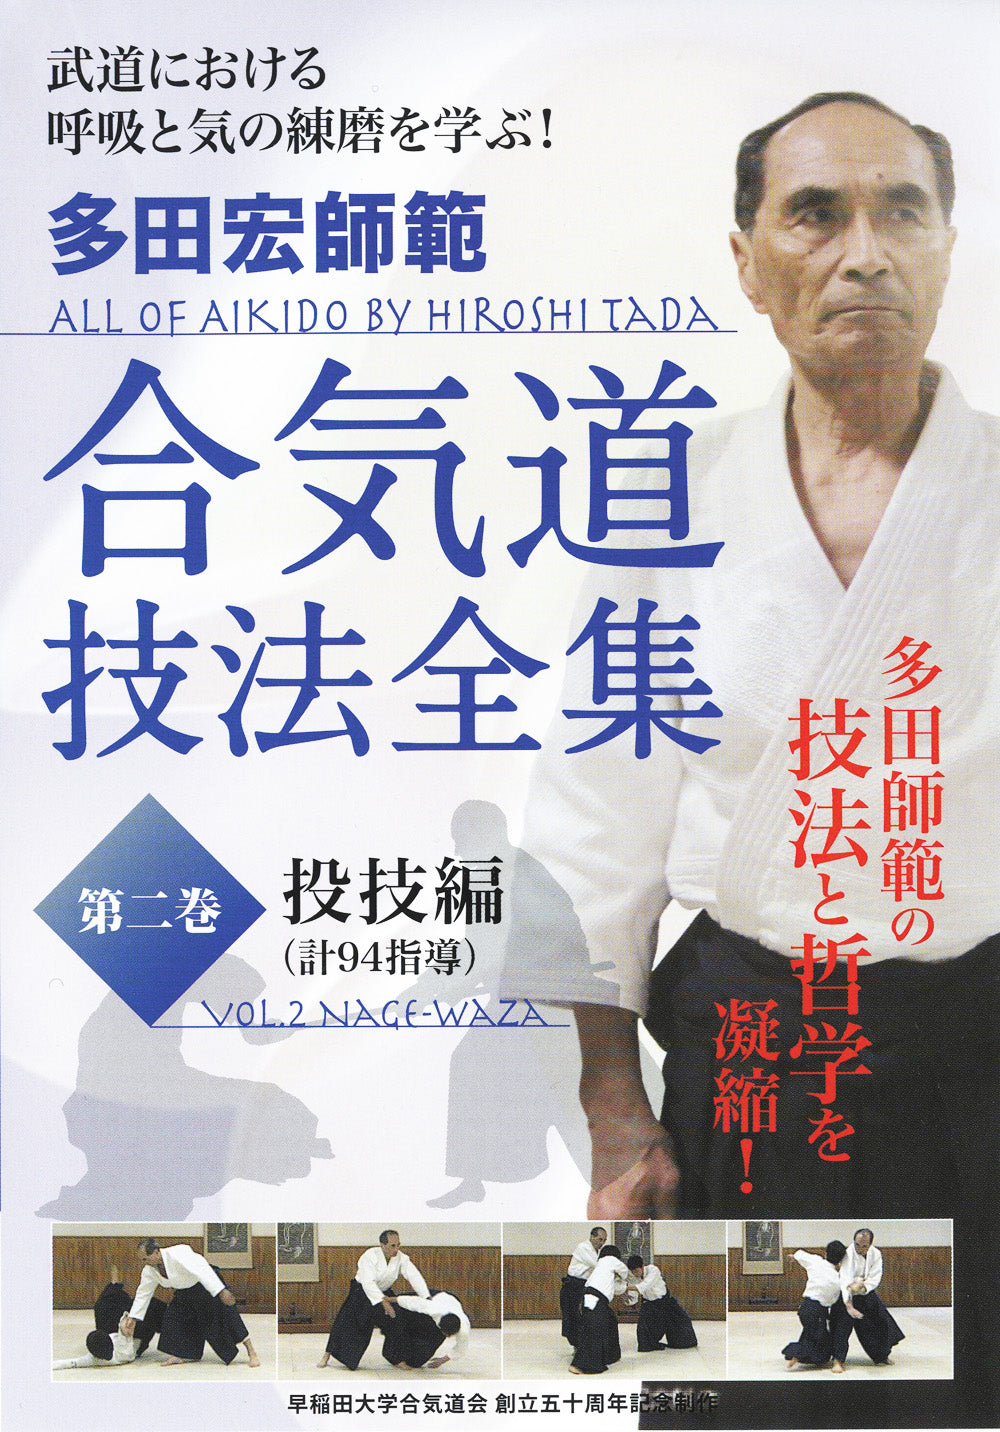 All of Aikido by Hiroshi Tada DVD 2: Nage Waza